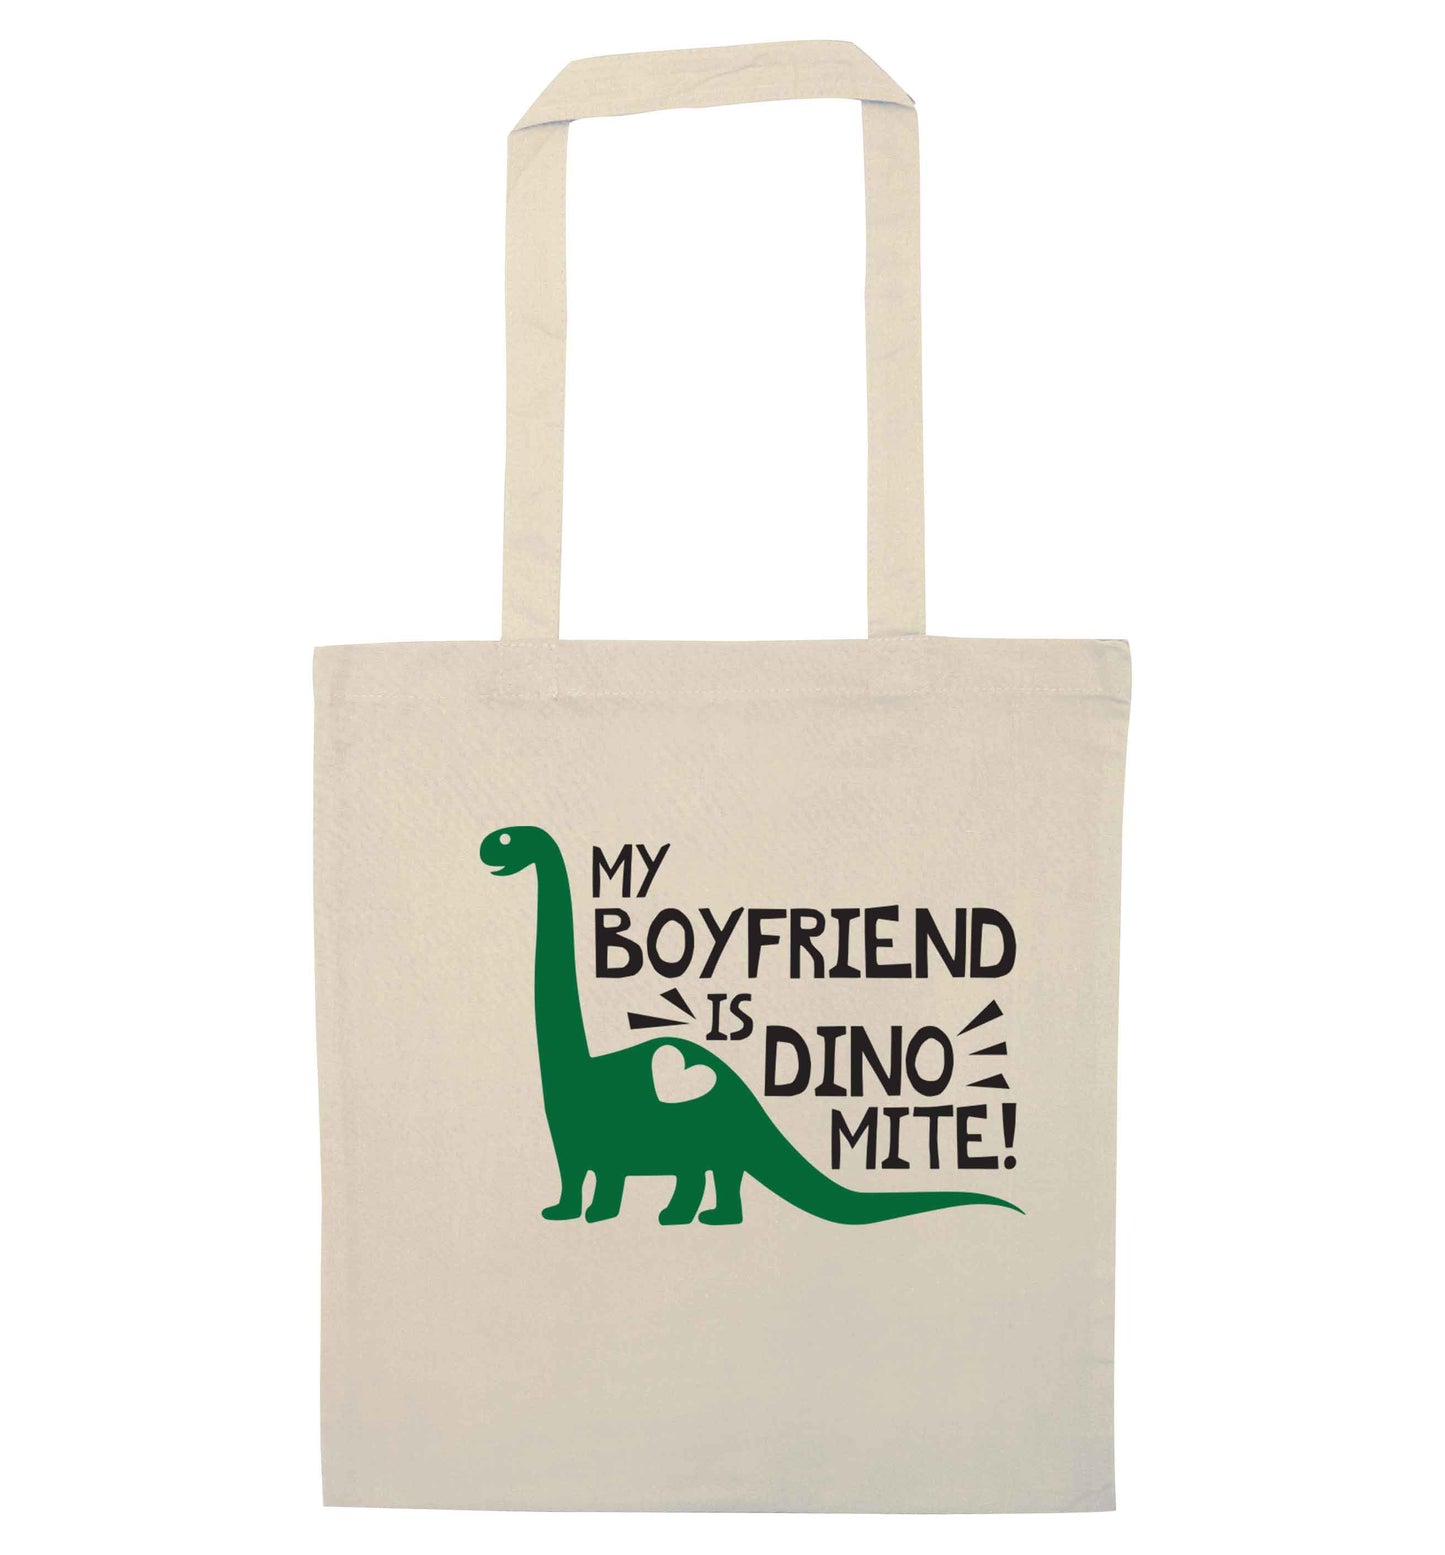 My boyfriend is dinomite! natural tote bag